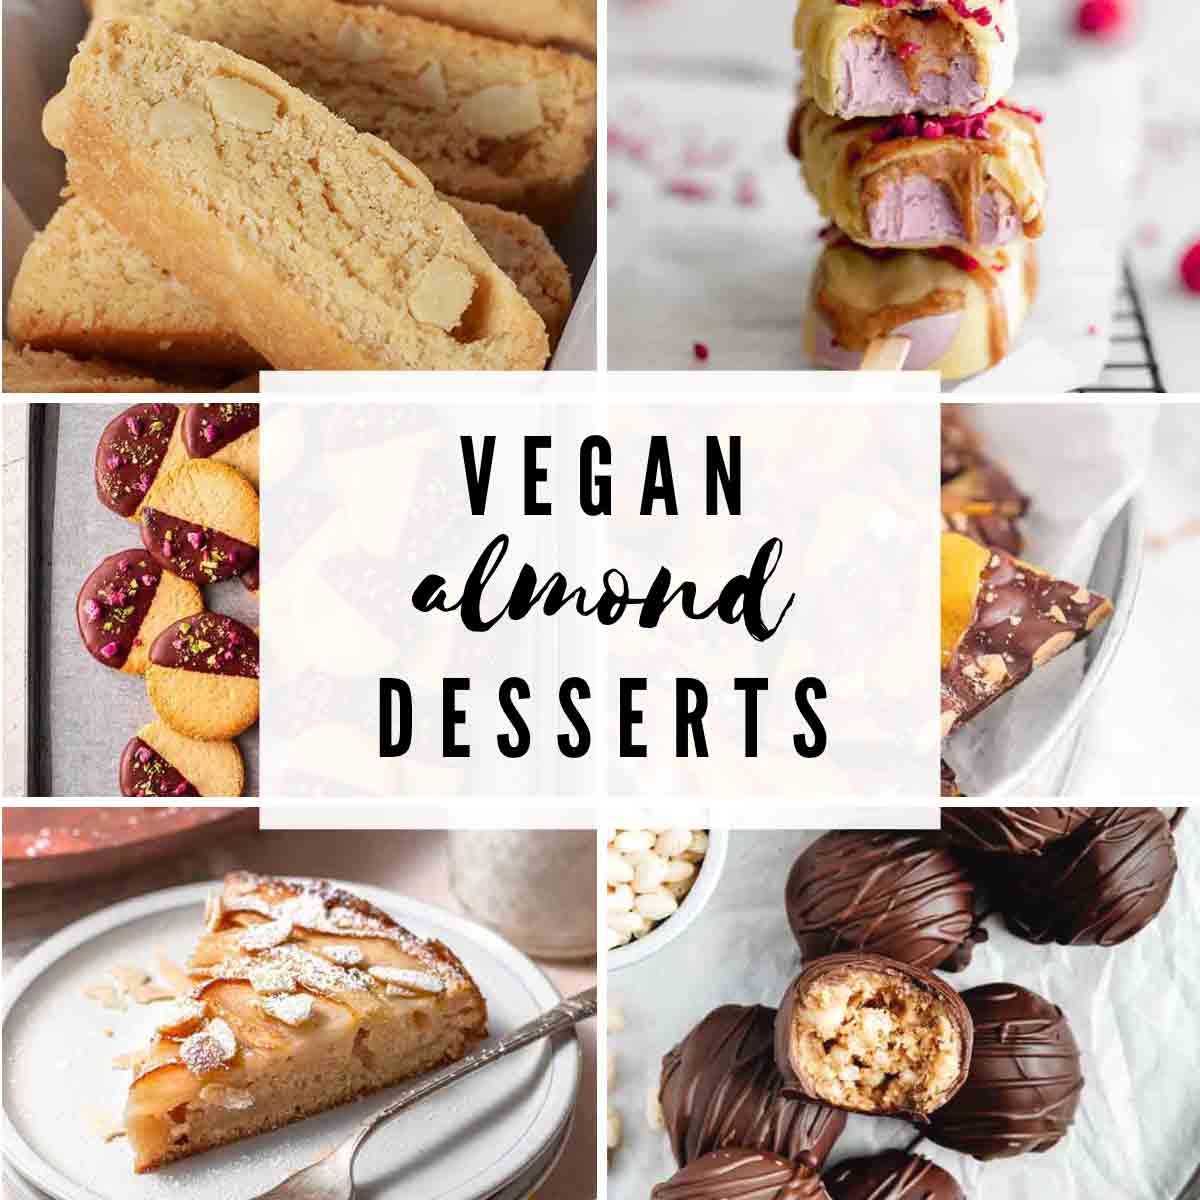 6 Pictures Of Vegan Almond Desserts